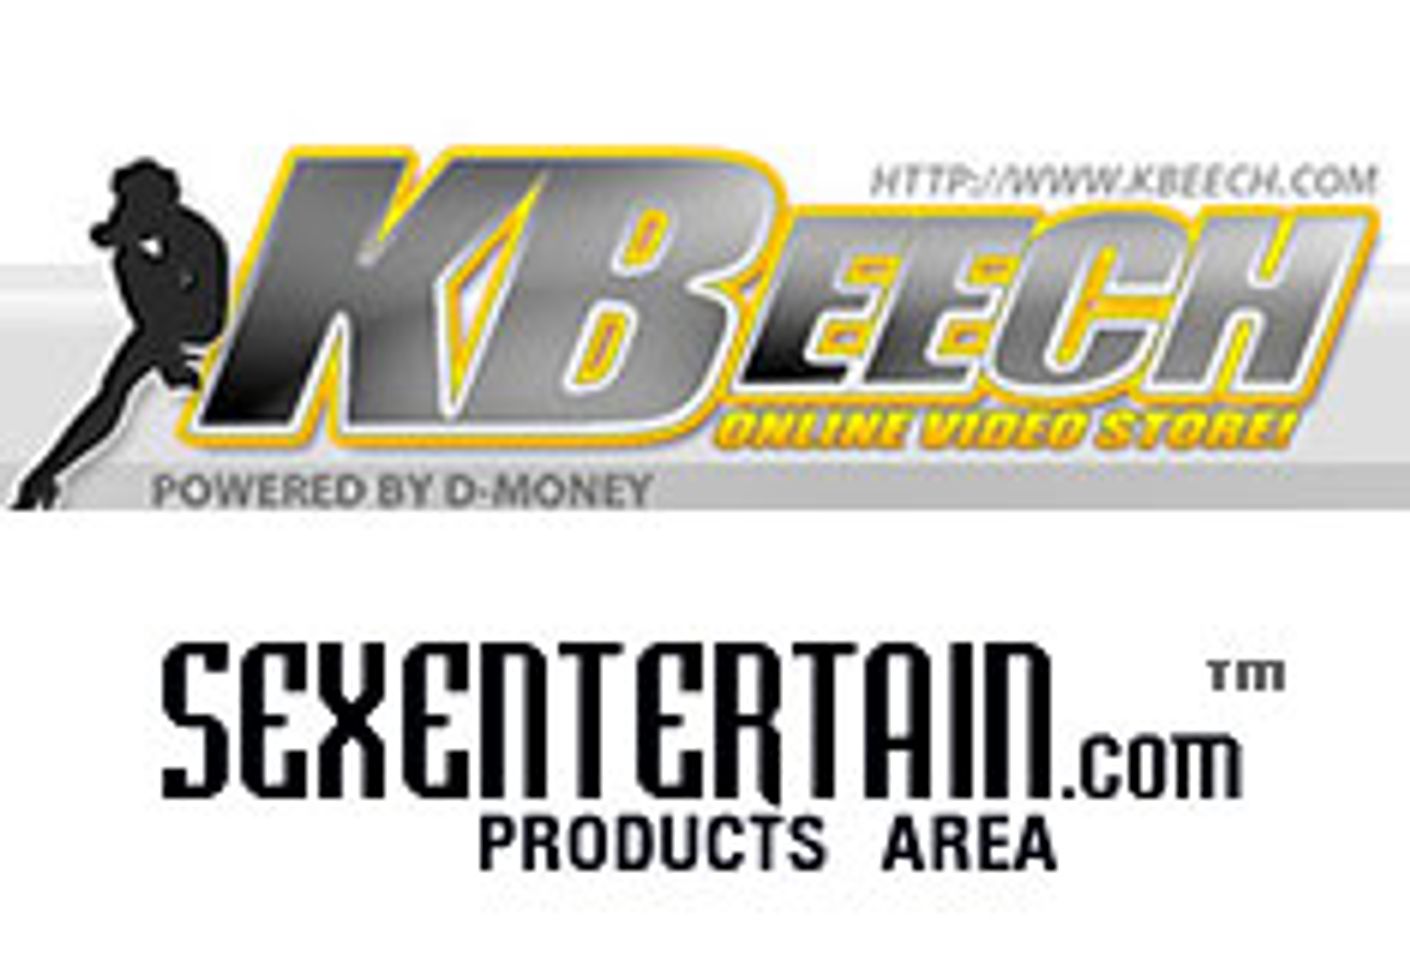 K-Beech Video Partners With SexEntertain